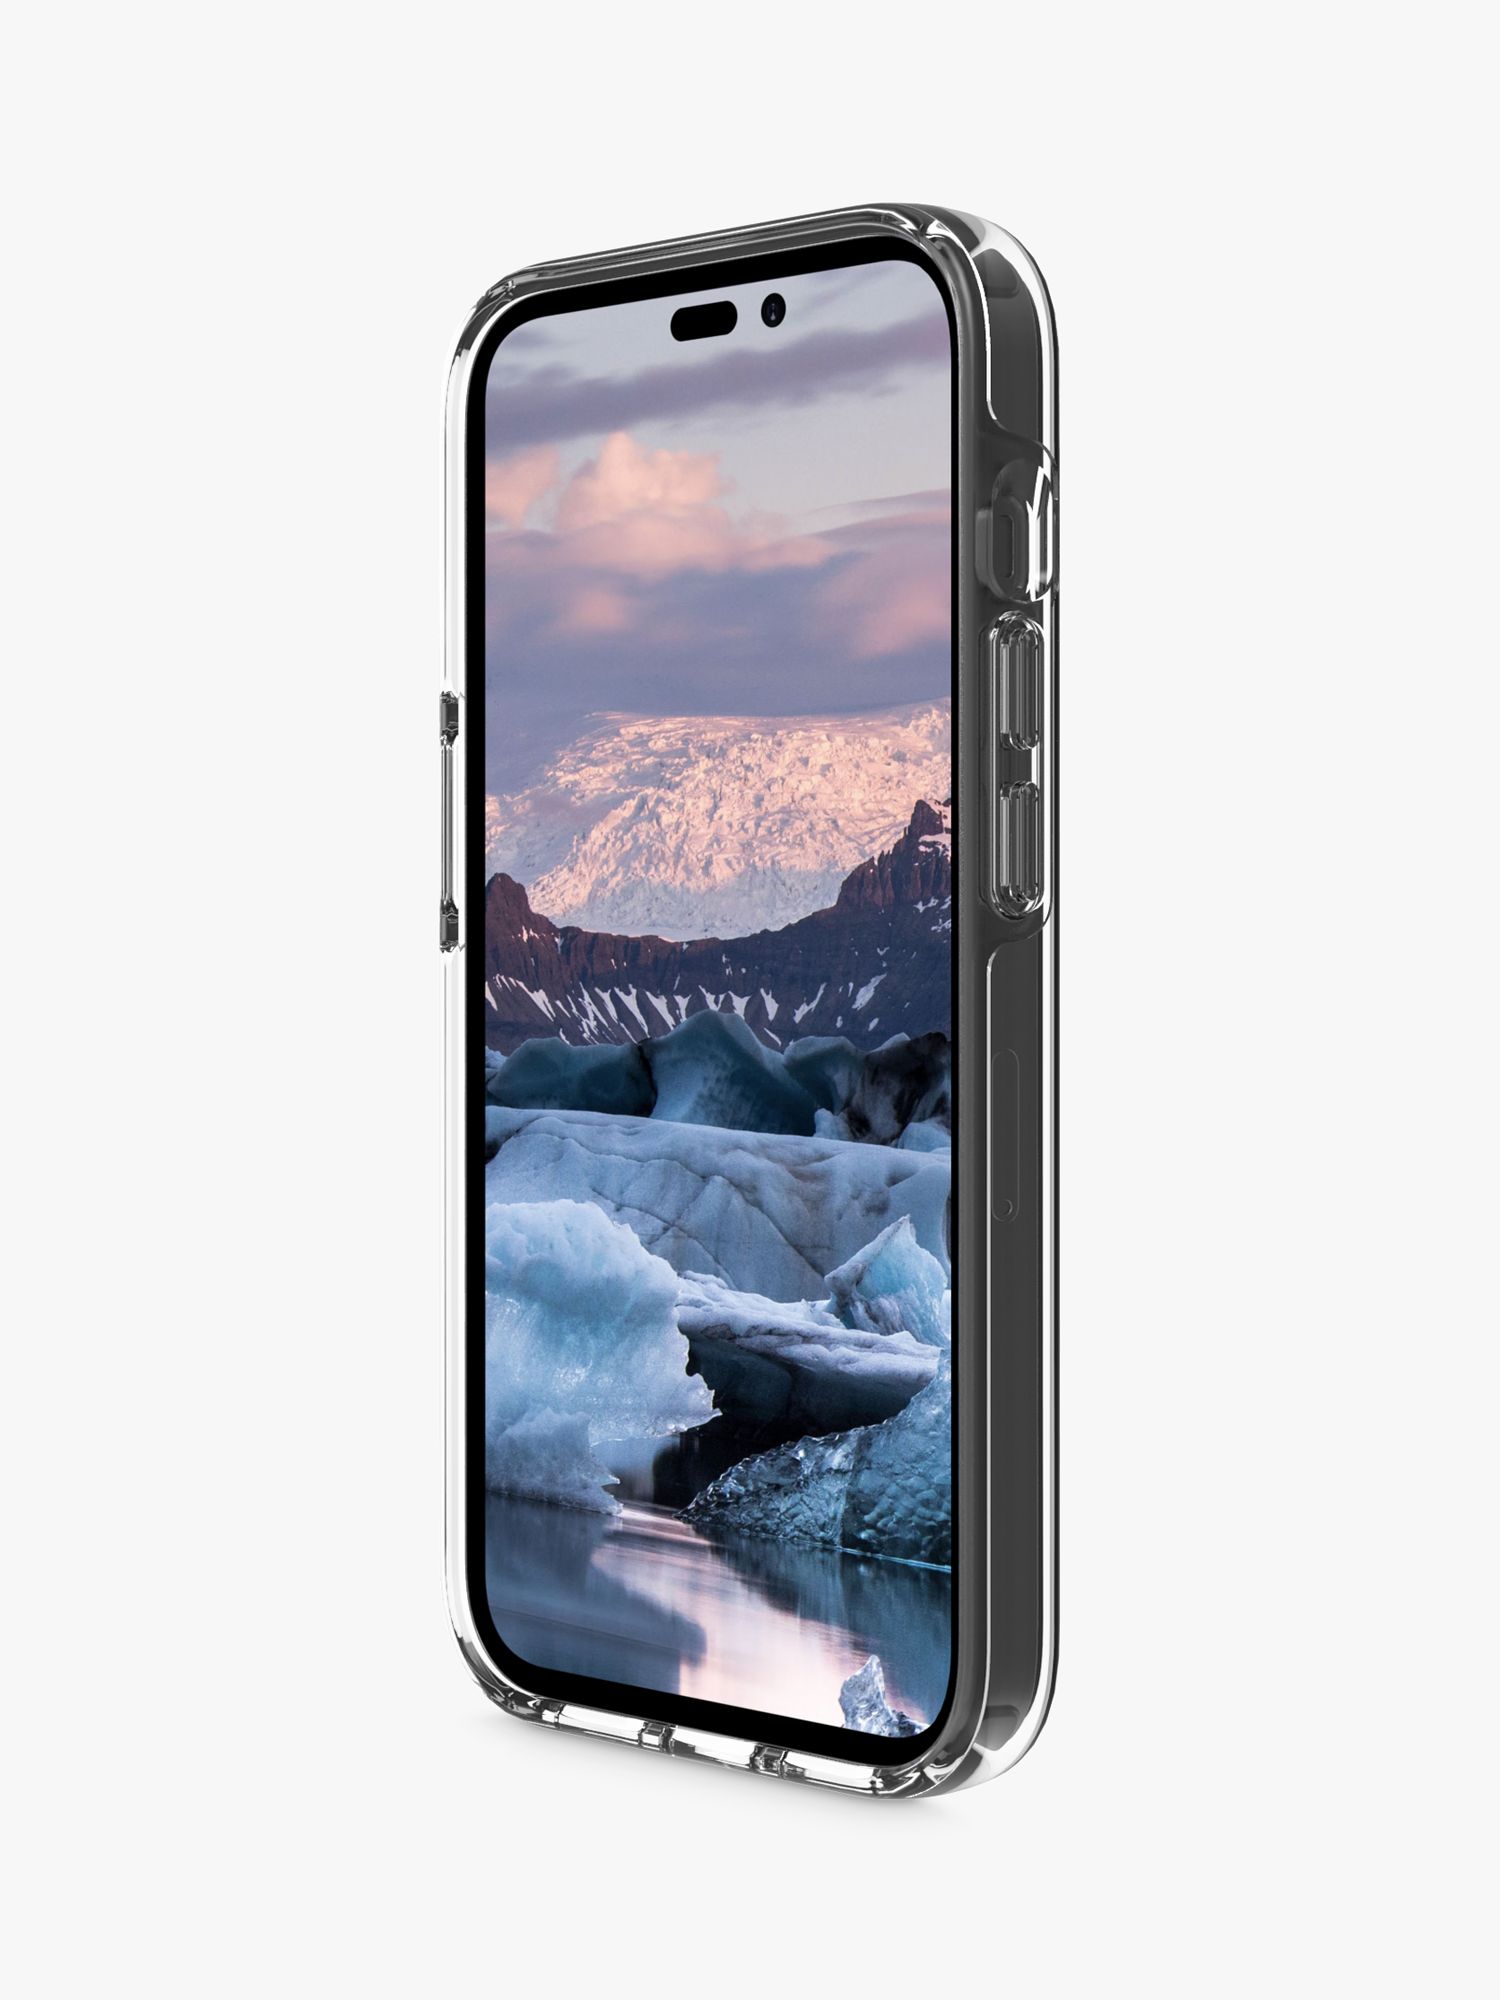 QDOS OptiGuard Eco Glass Plus iPhone 15 / iPhone 14 Pro